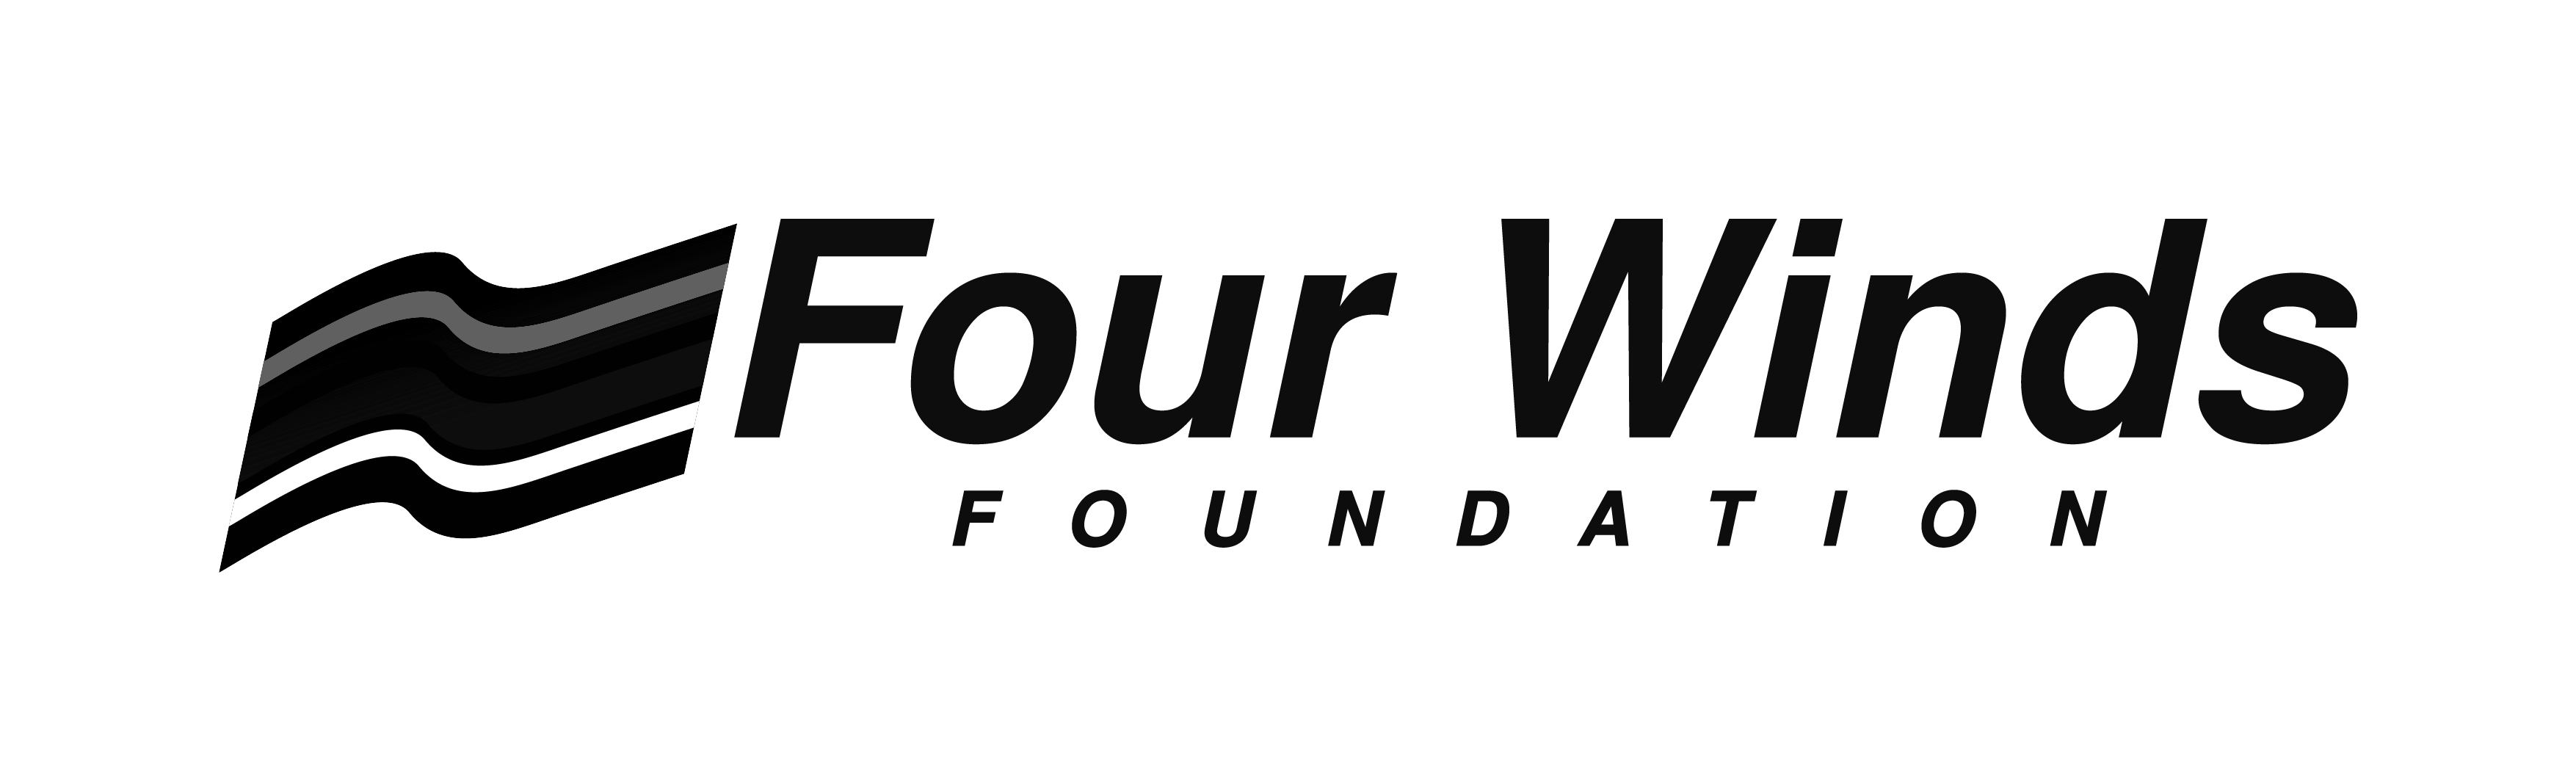 Four Winds Foundation logo